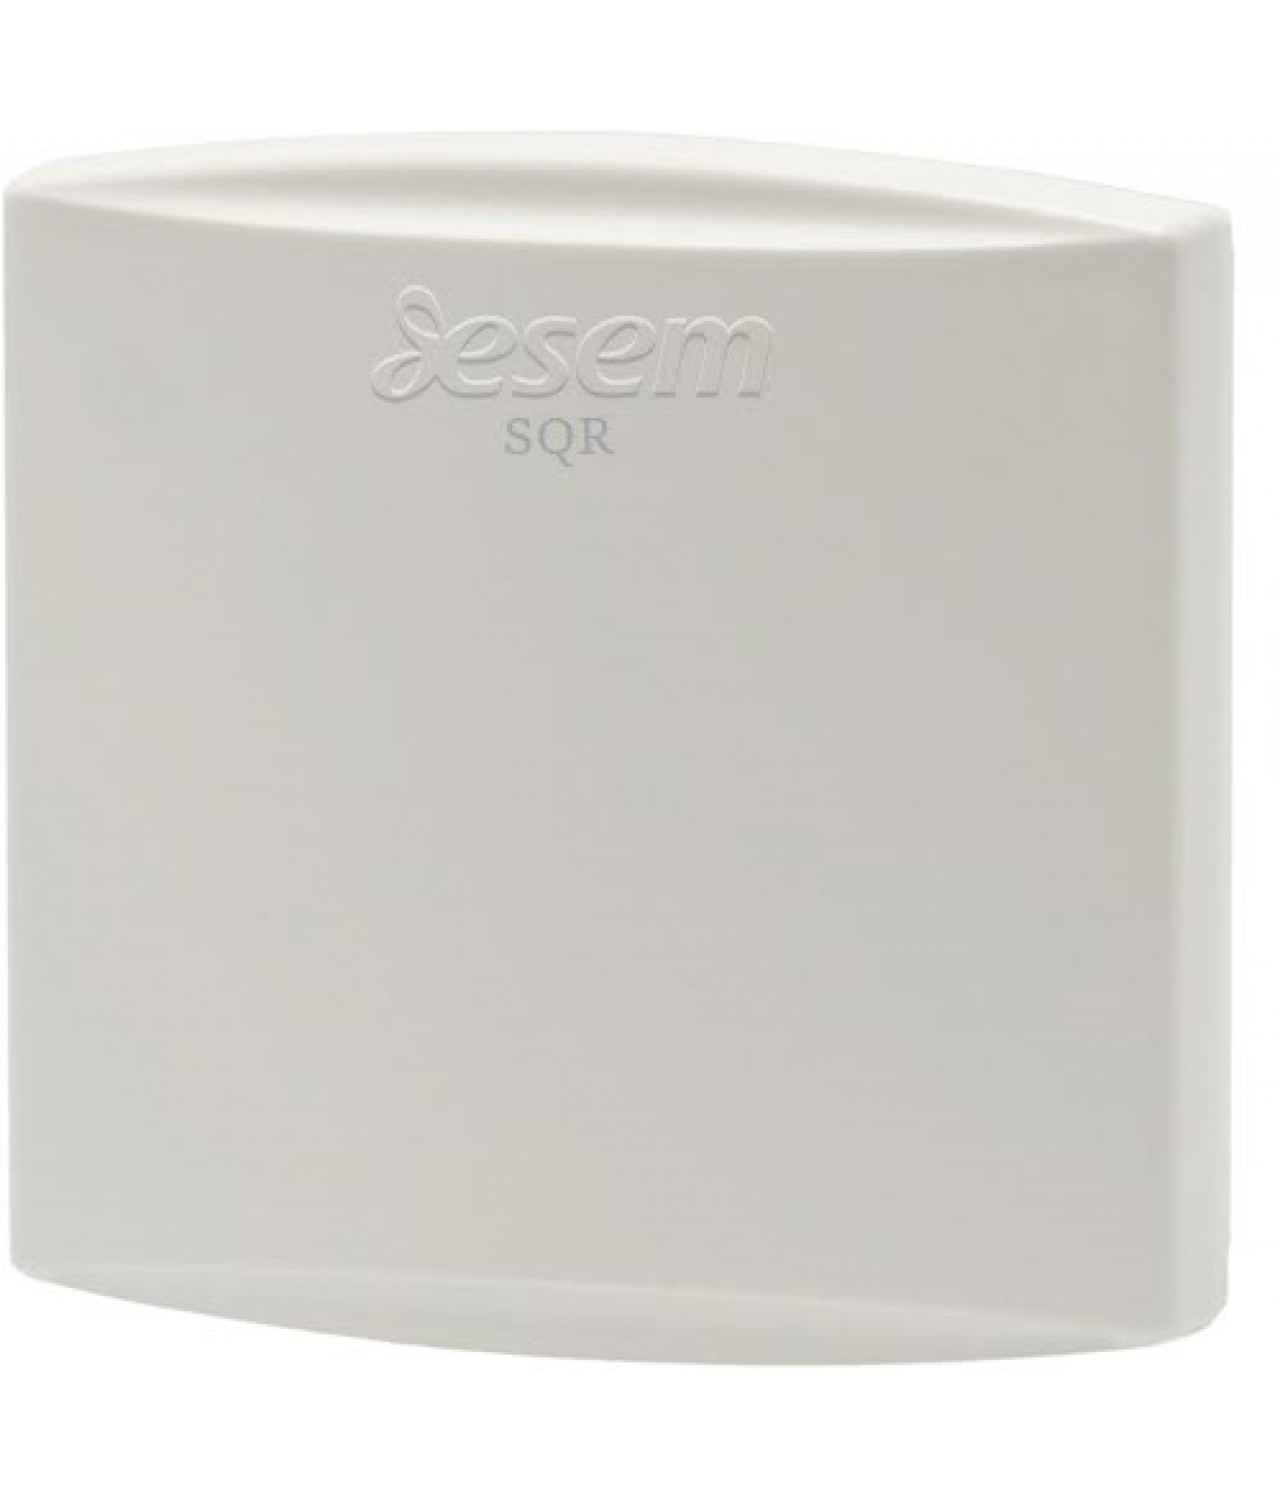 SQR - room air quality and temperature sensor